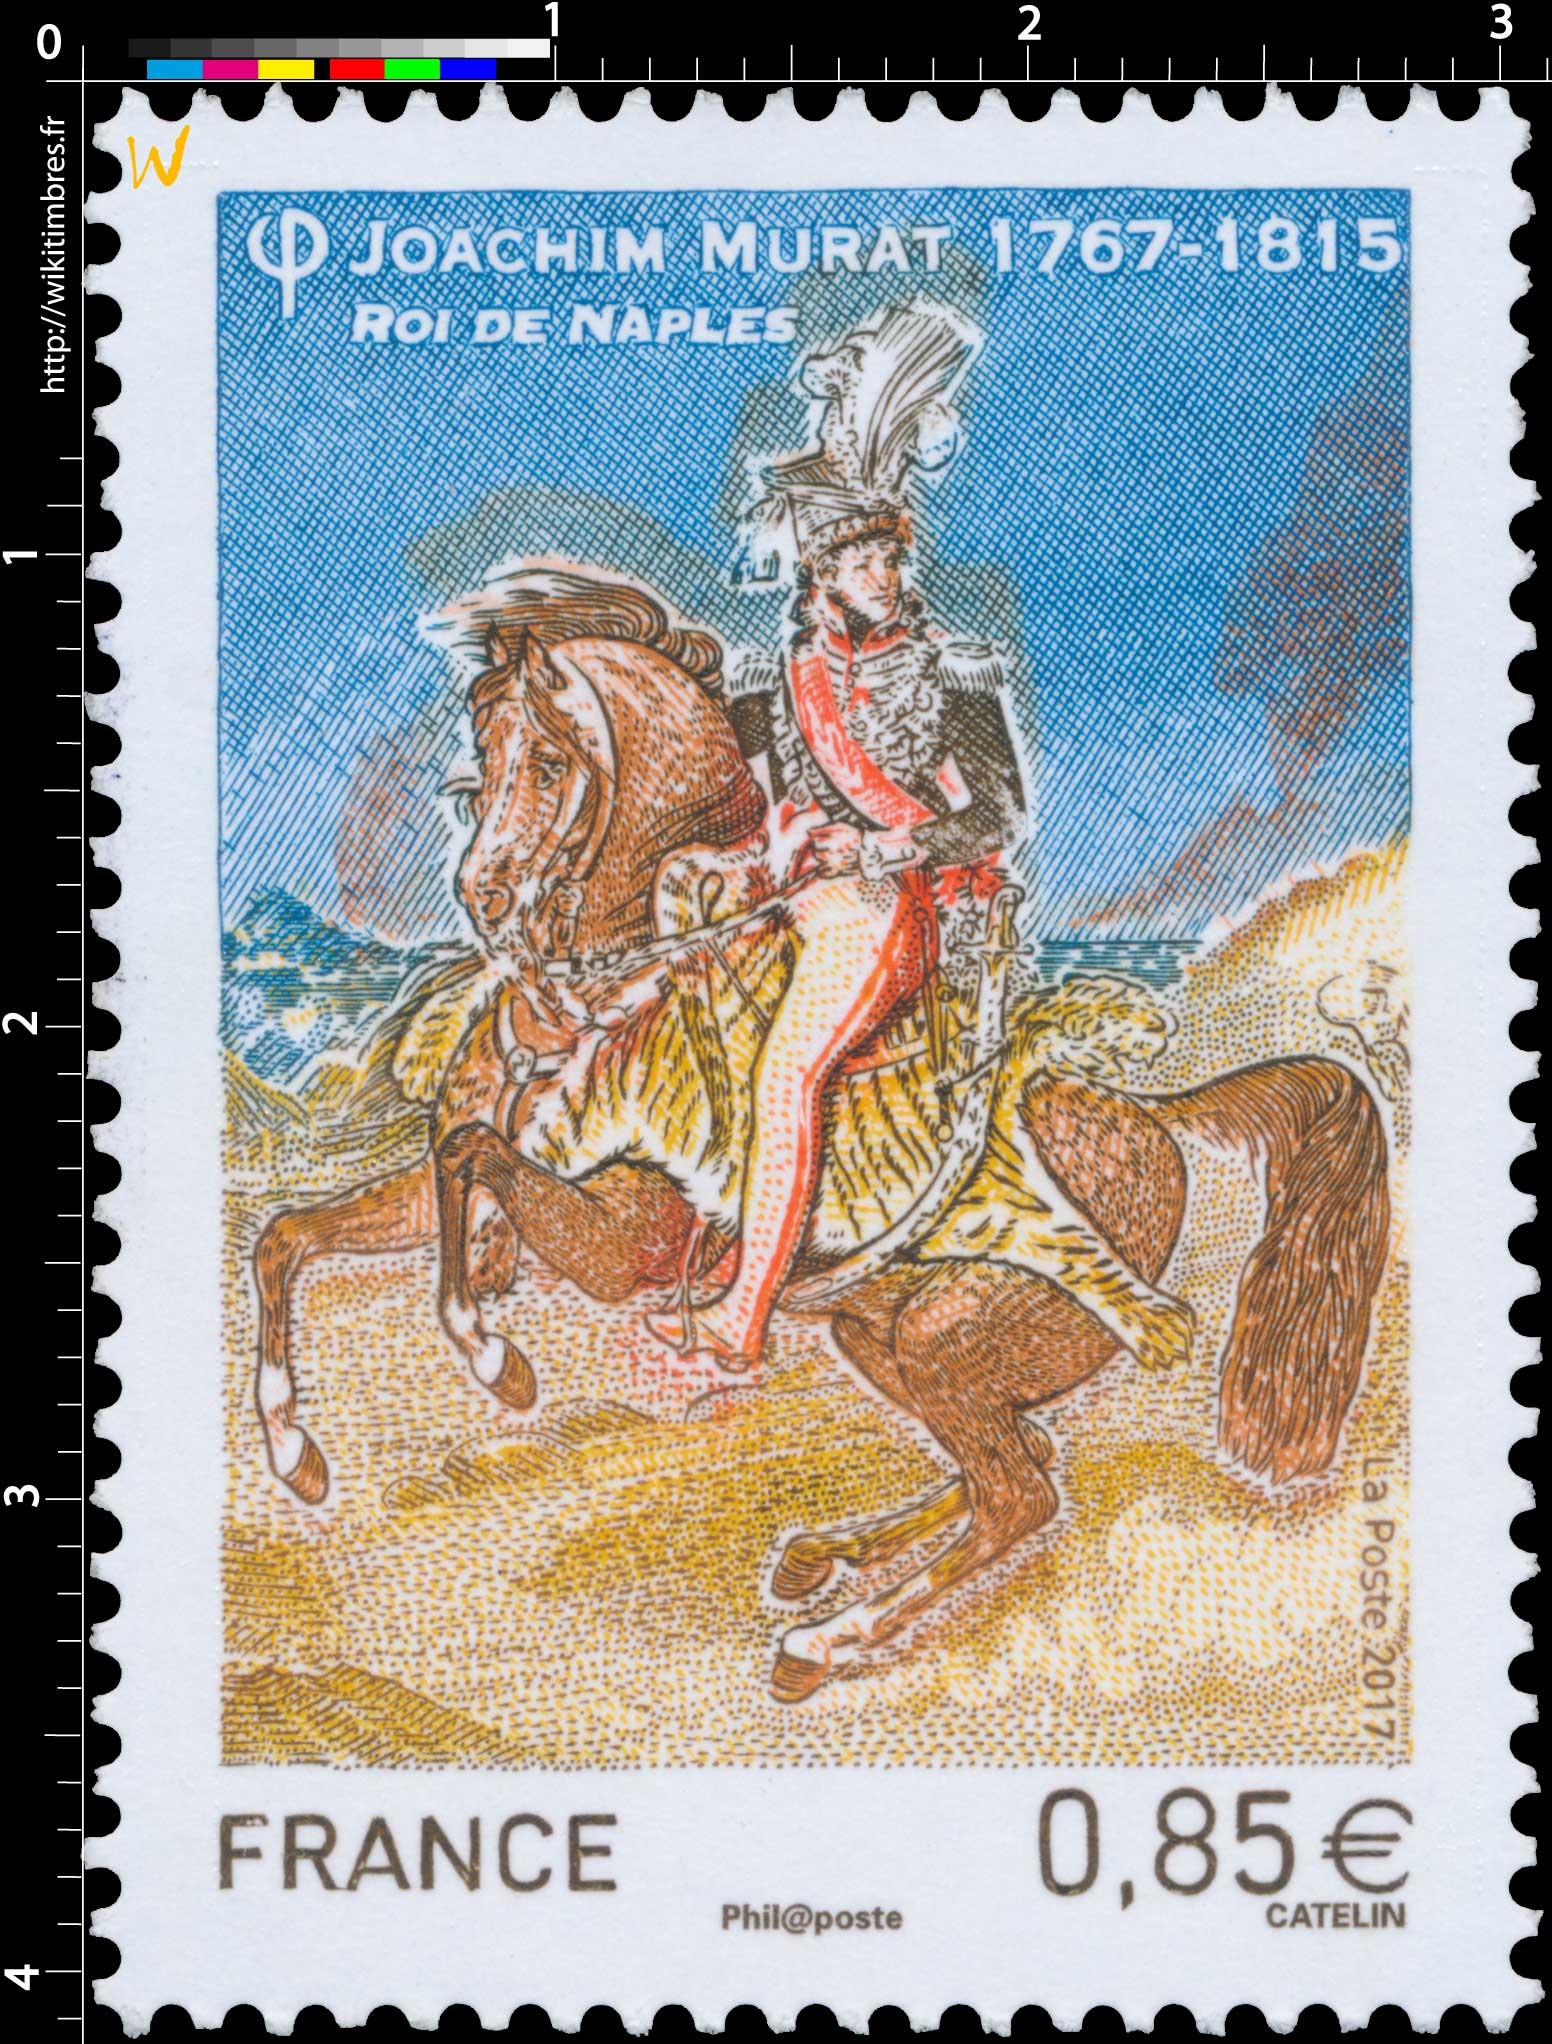 2017 Joachim Murat 1767 - 1815 Roi de Naples